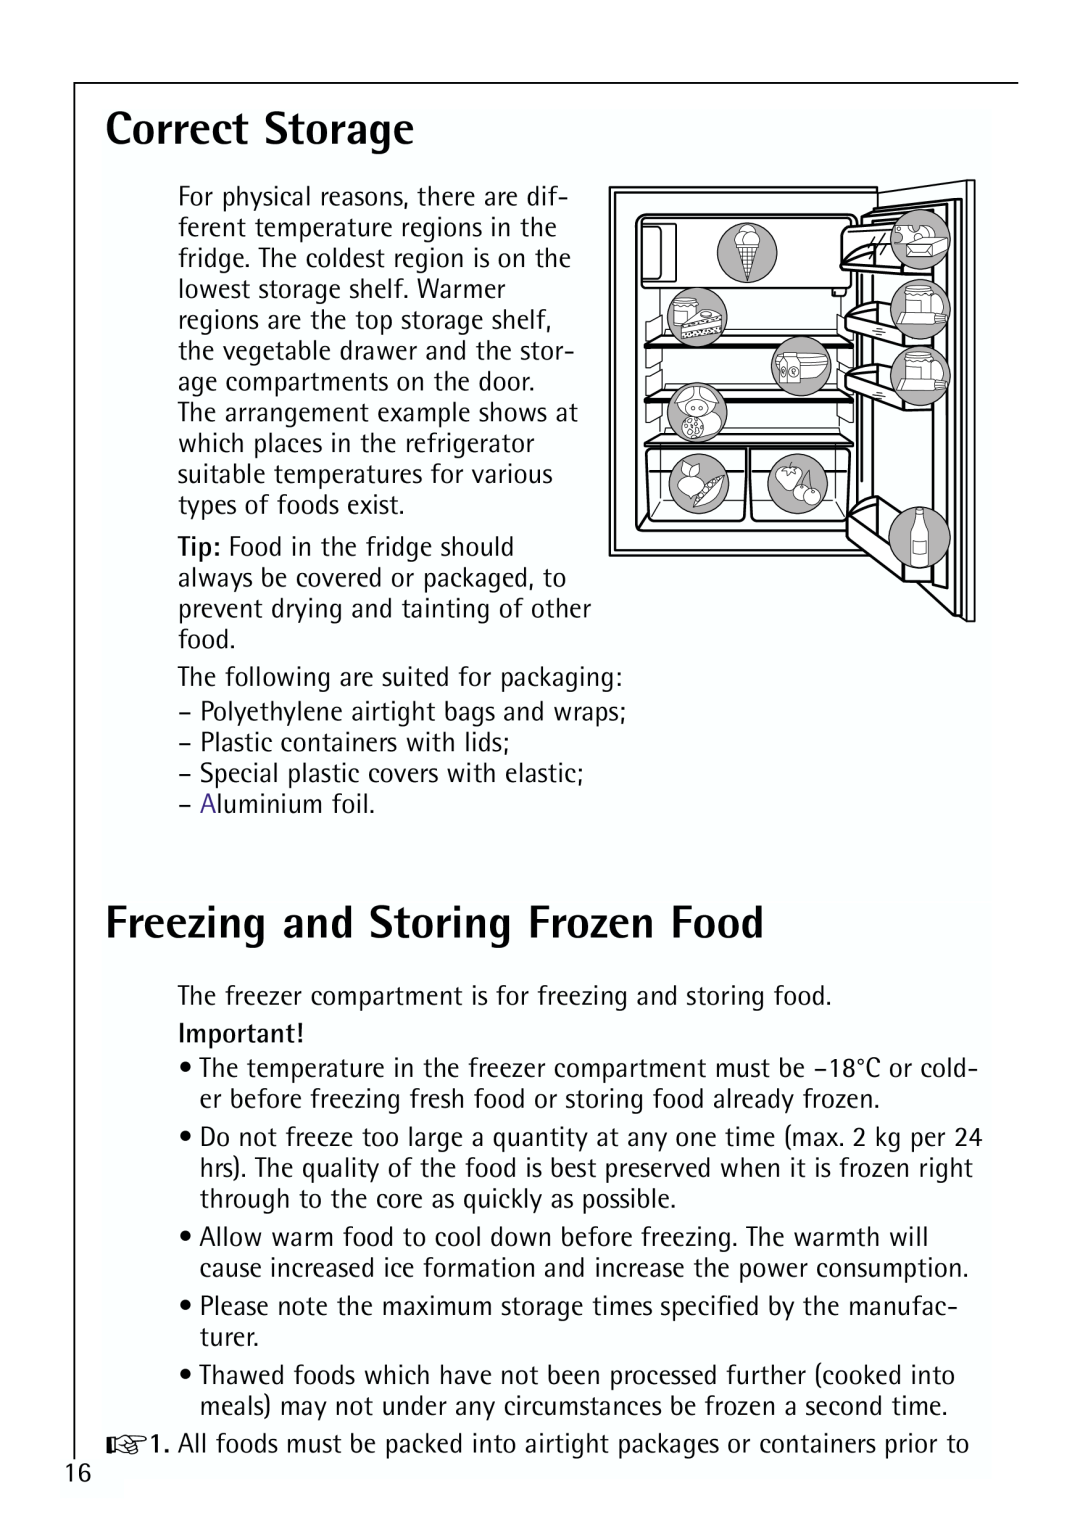 Electrolux 64150 TK manual Correct Storage, Freezing and Storing Frozen Food 